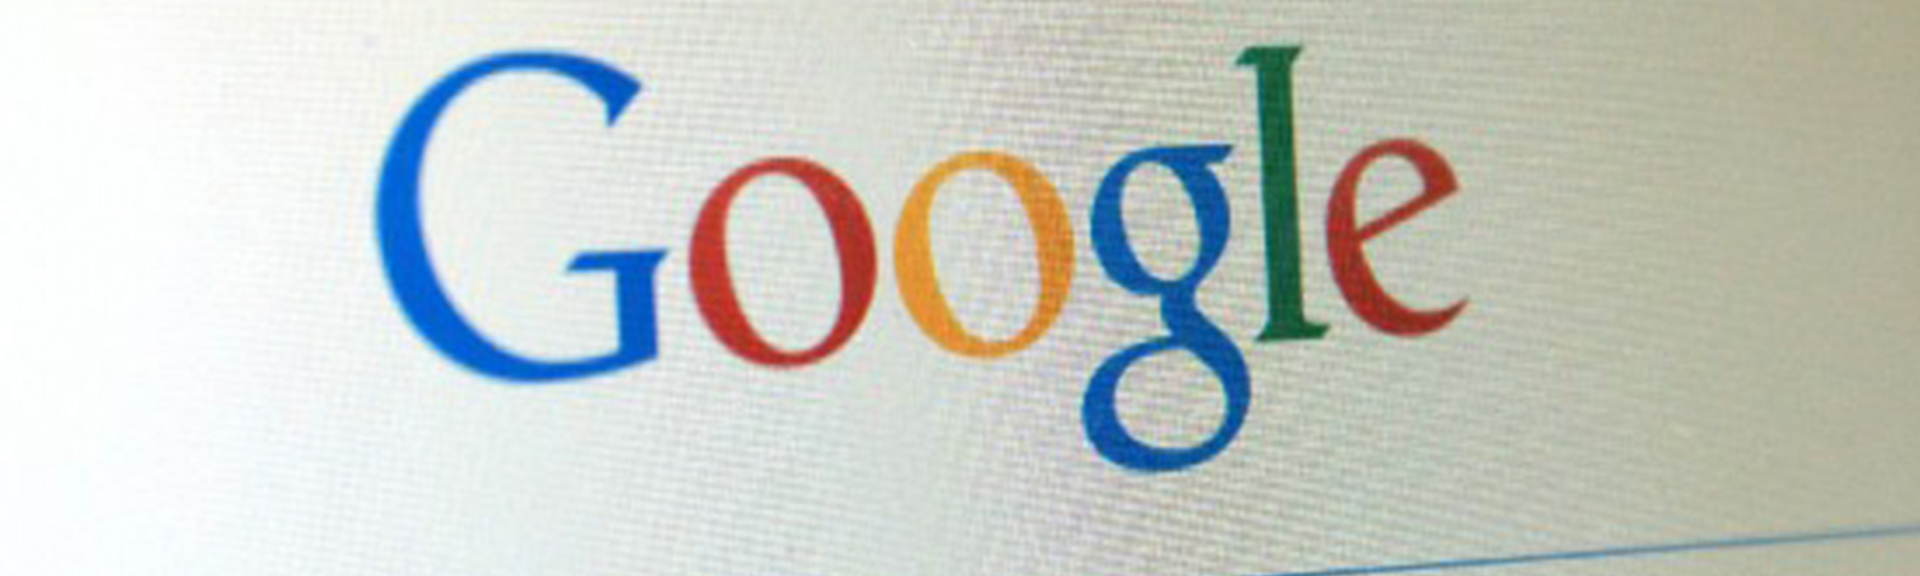 Google will begin ranking mobile-friendly sites higher starting 21st April